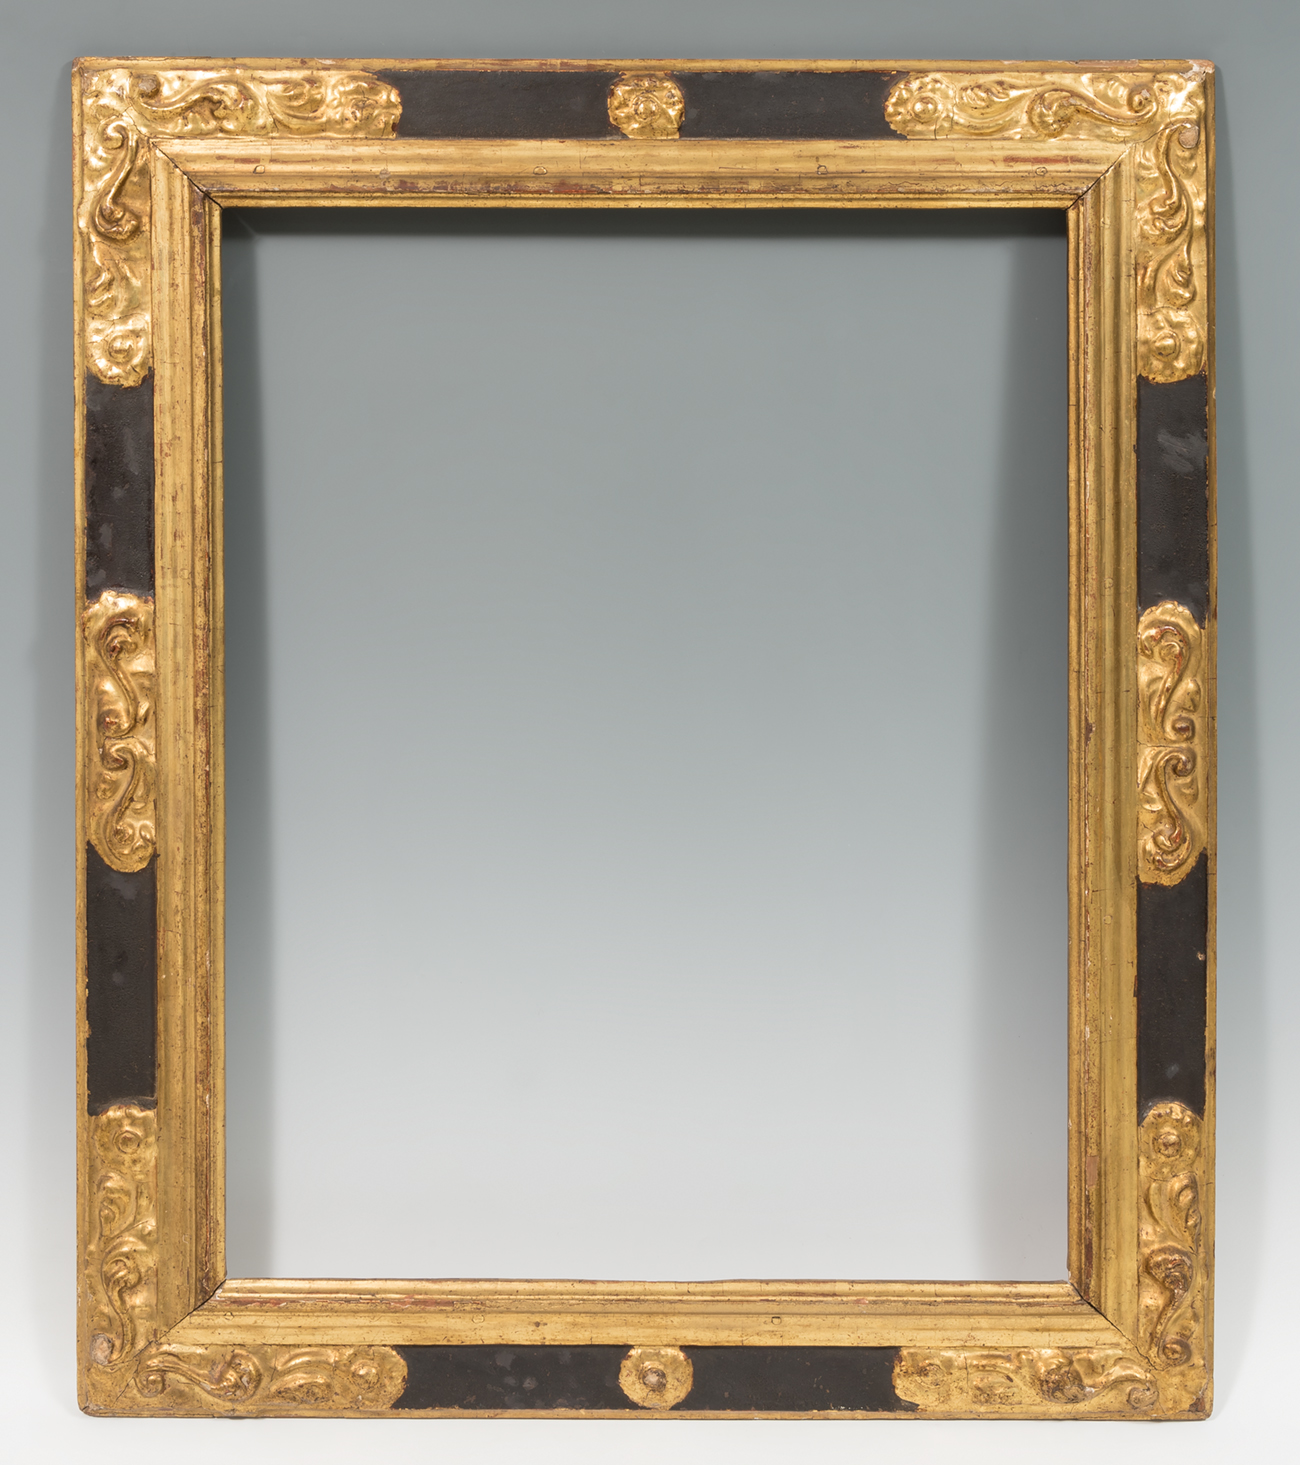 Frame; Spain, early 17th century.Wood.Measurements: 83 x 63 cm (light); 102 x 83 cm (frame).